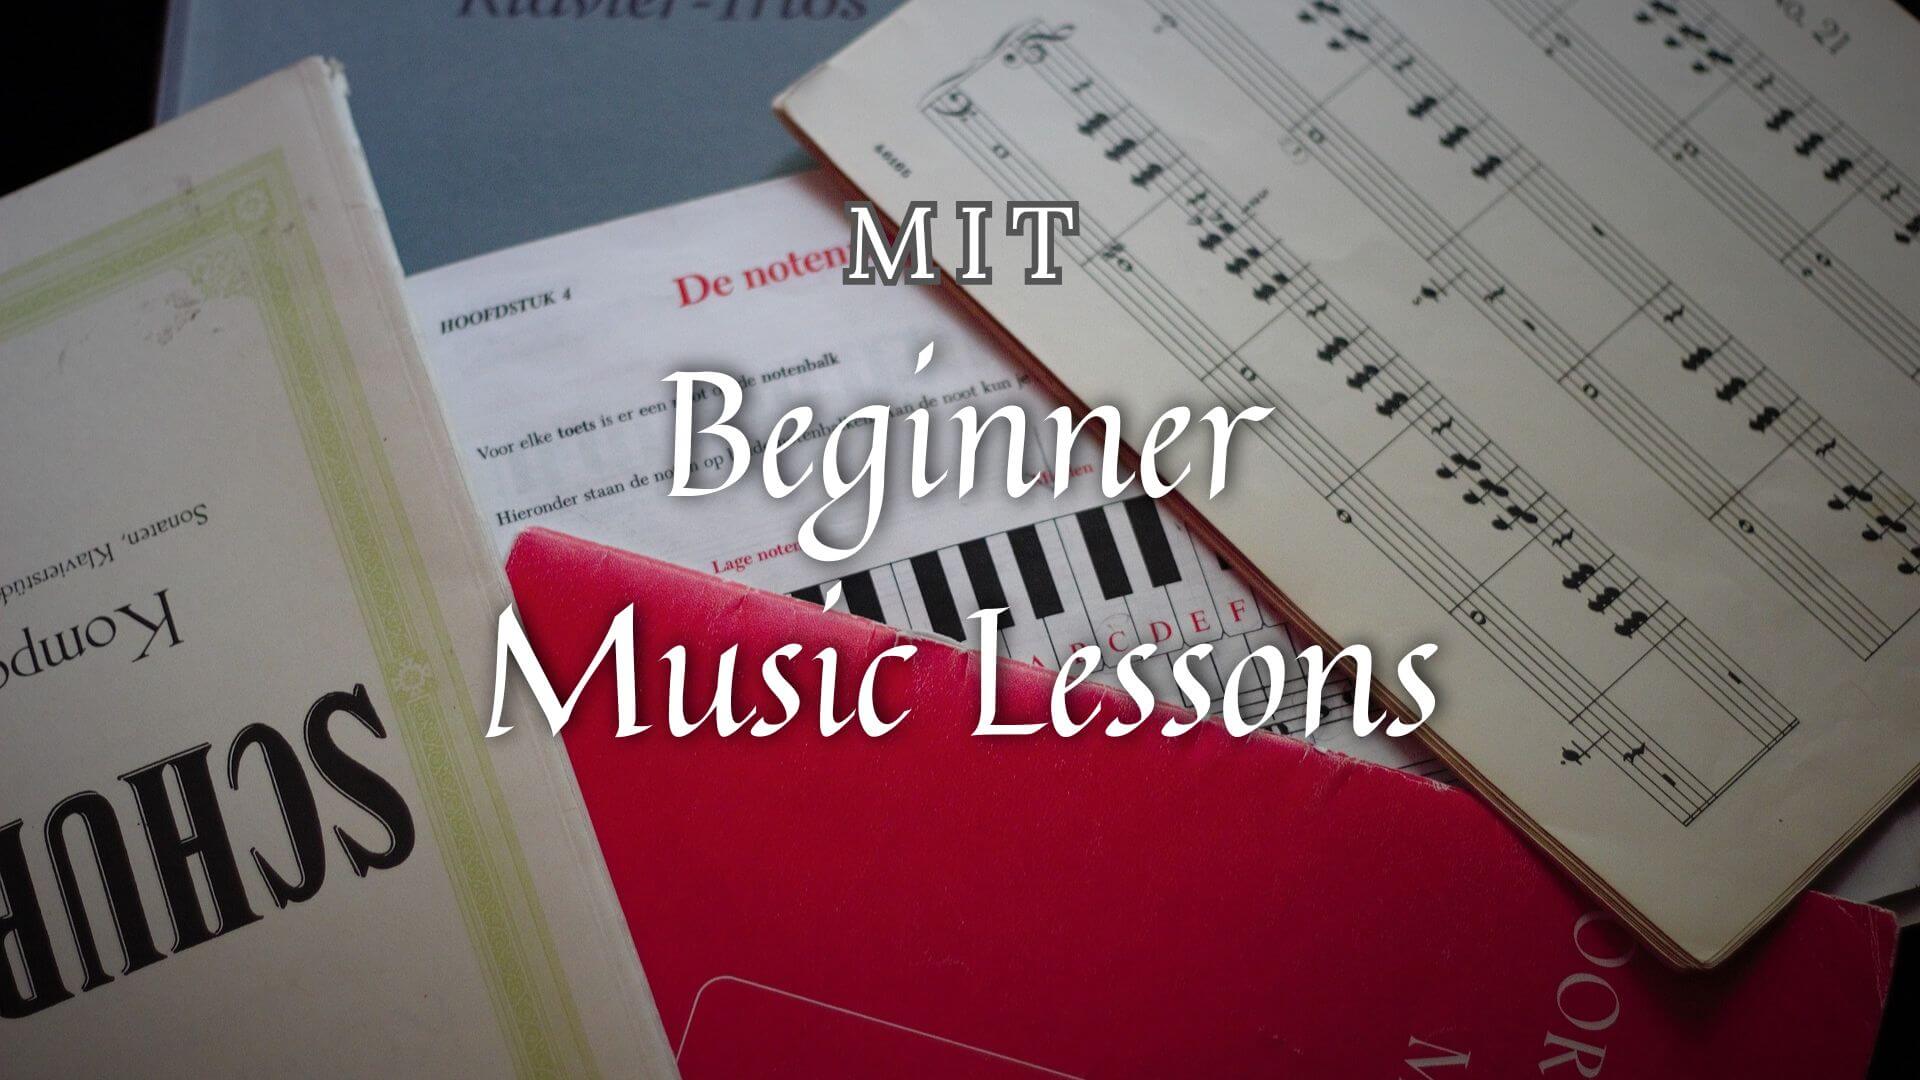 Beginner-Friendly Music Classes in MIT, Massachusetts